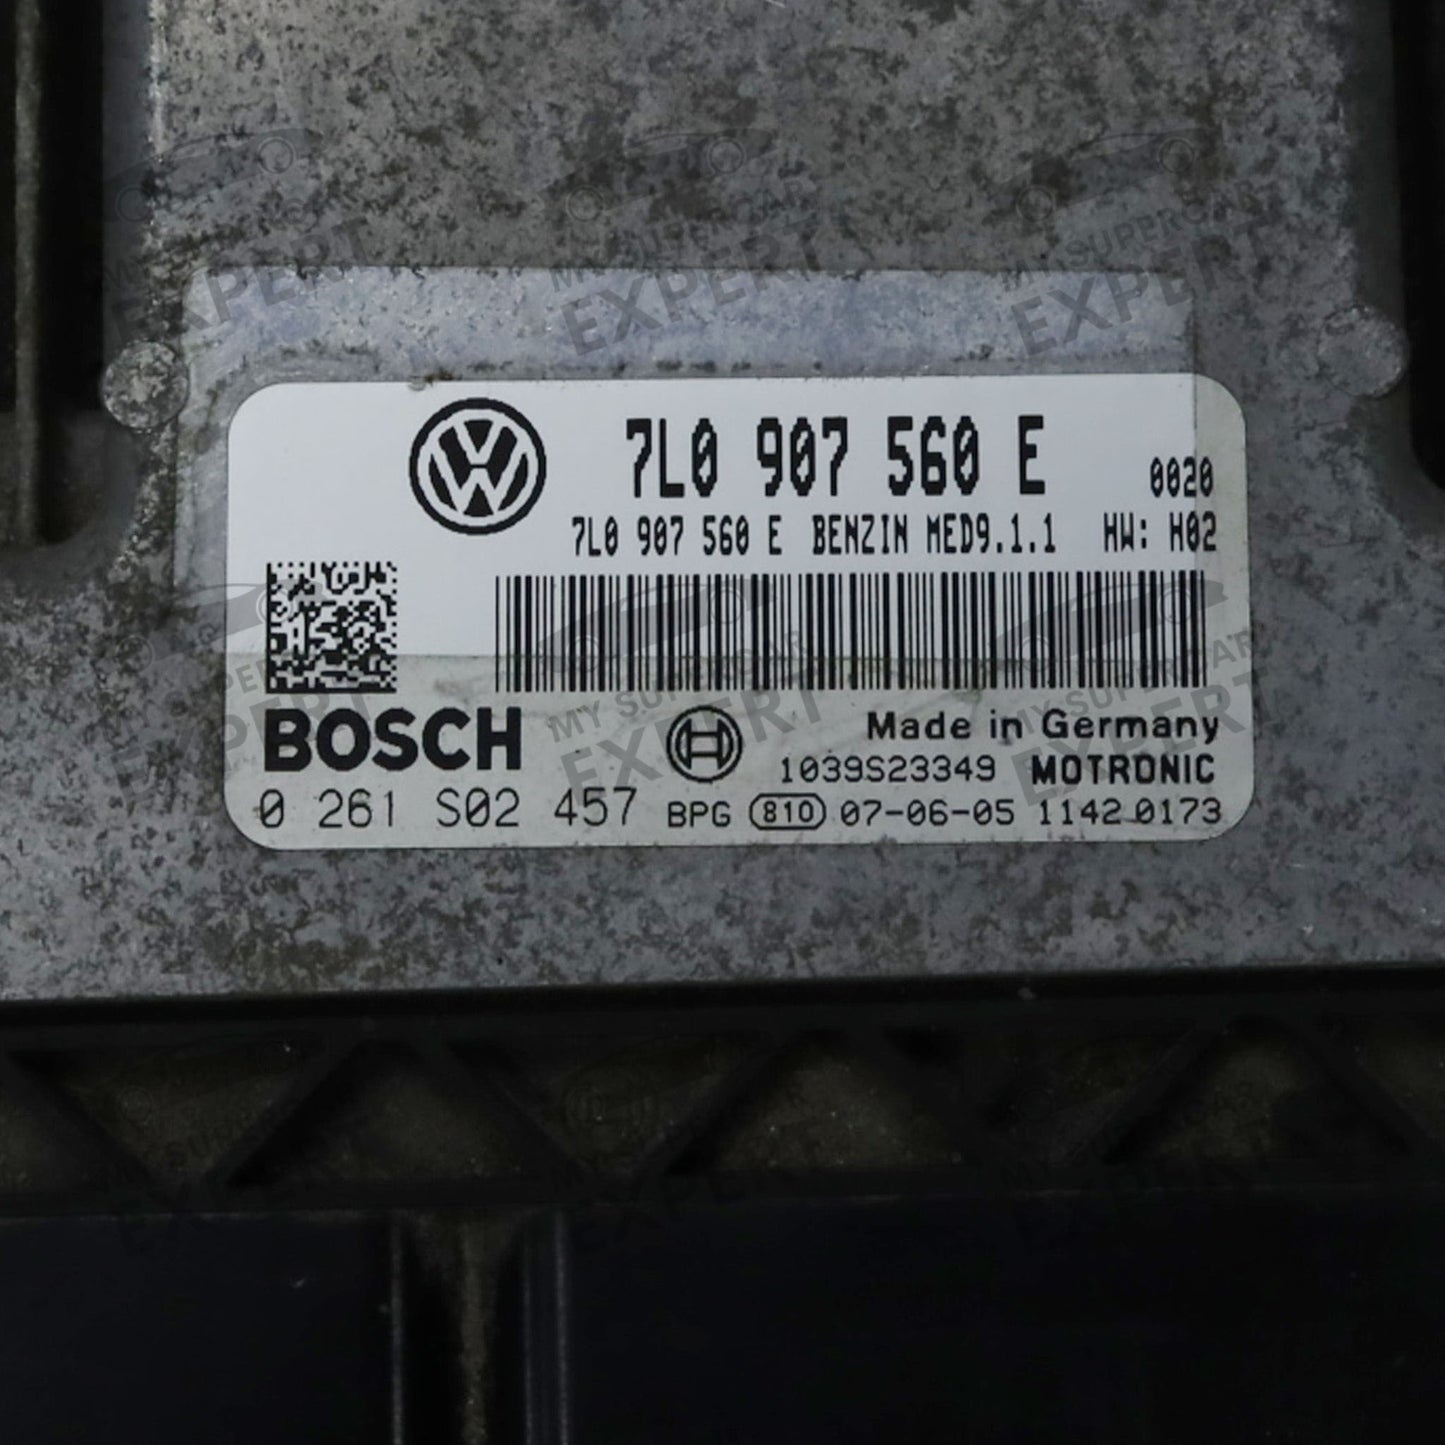 VW Volkswagen Touareg Unidad de control del motor ECU Bosch MED9.1.1 7L0907560E 0261S02457 usado